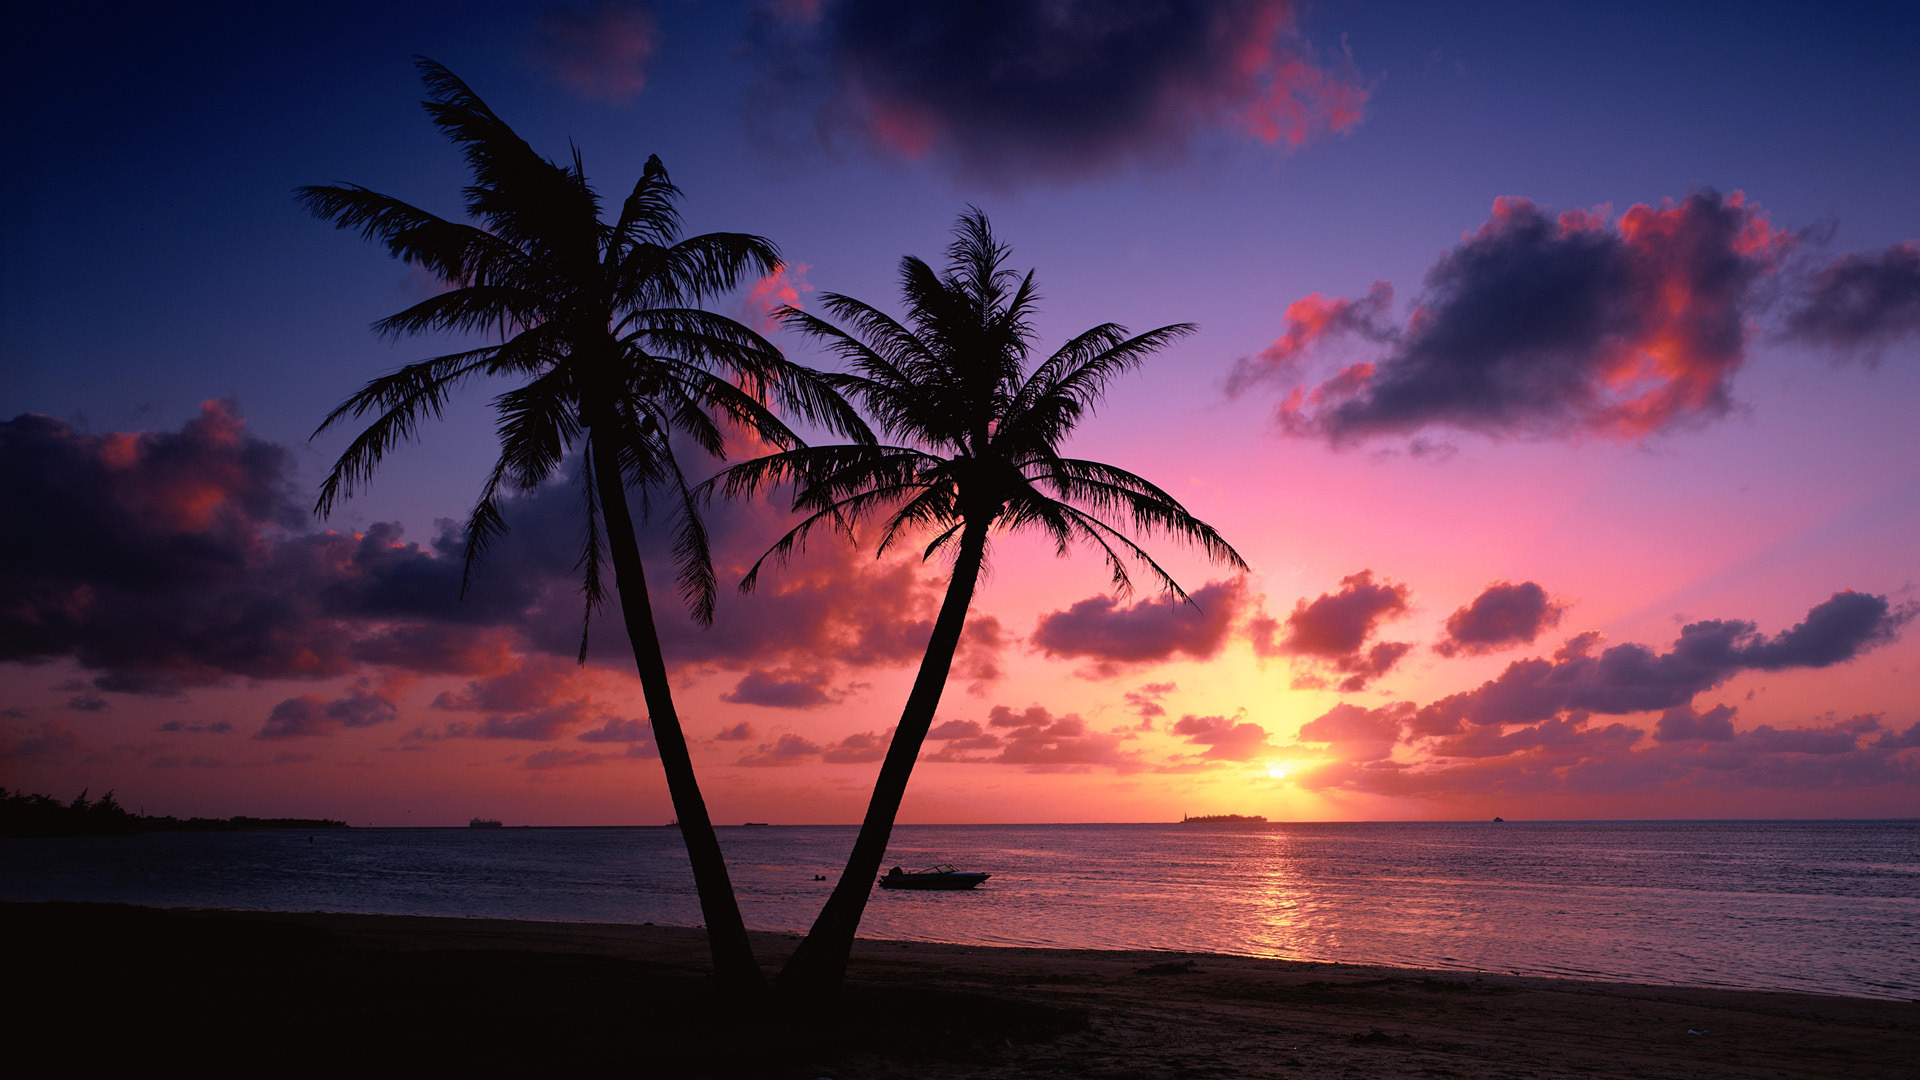 beach sunset landscape image